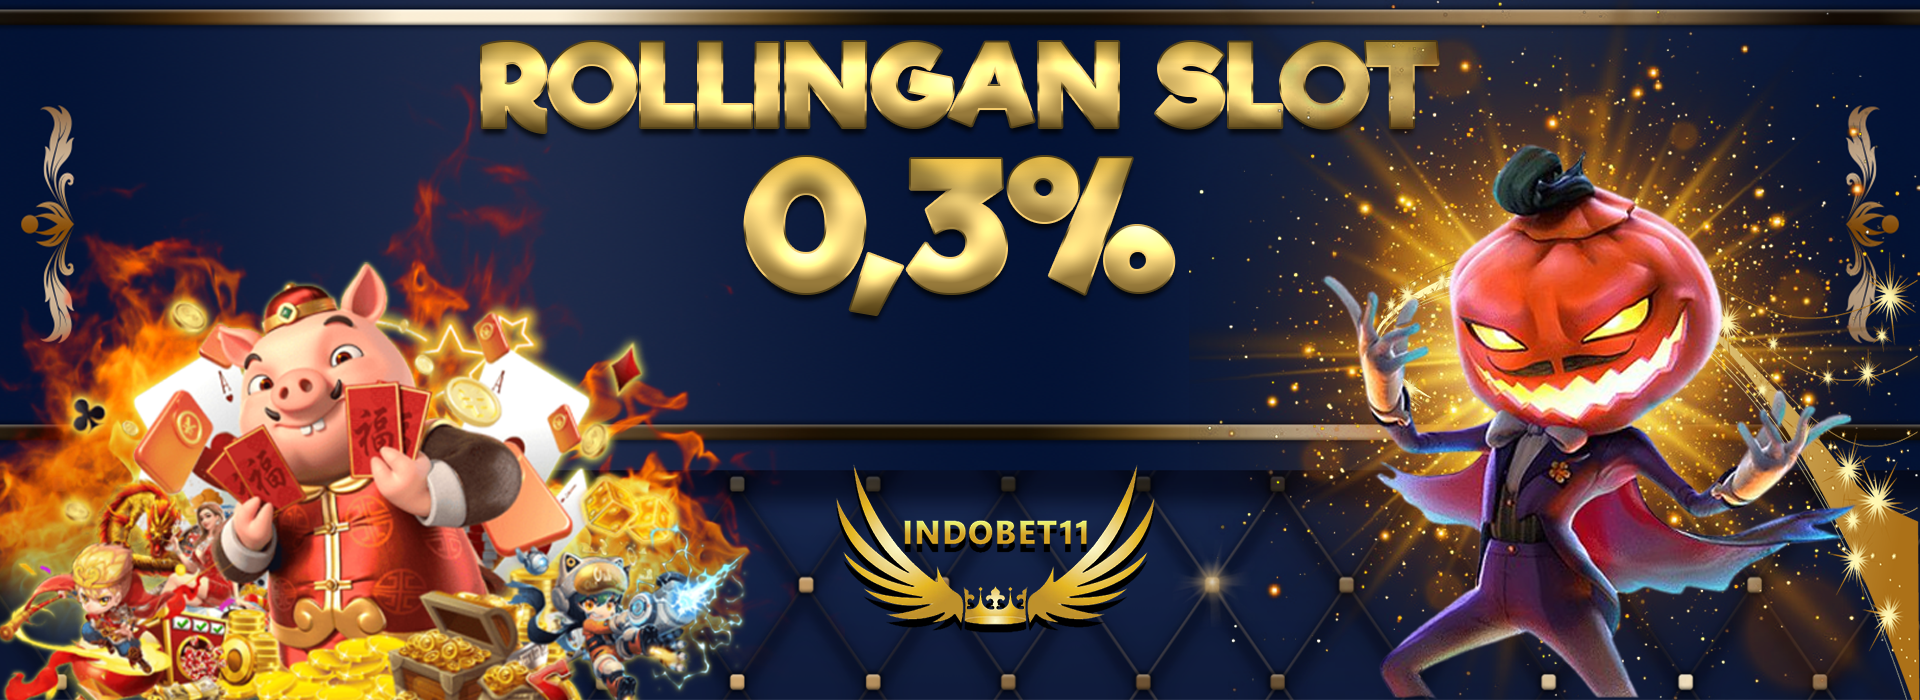 Rollingan Slot 0.3 %